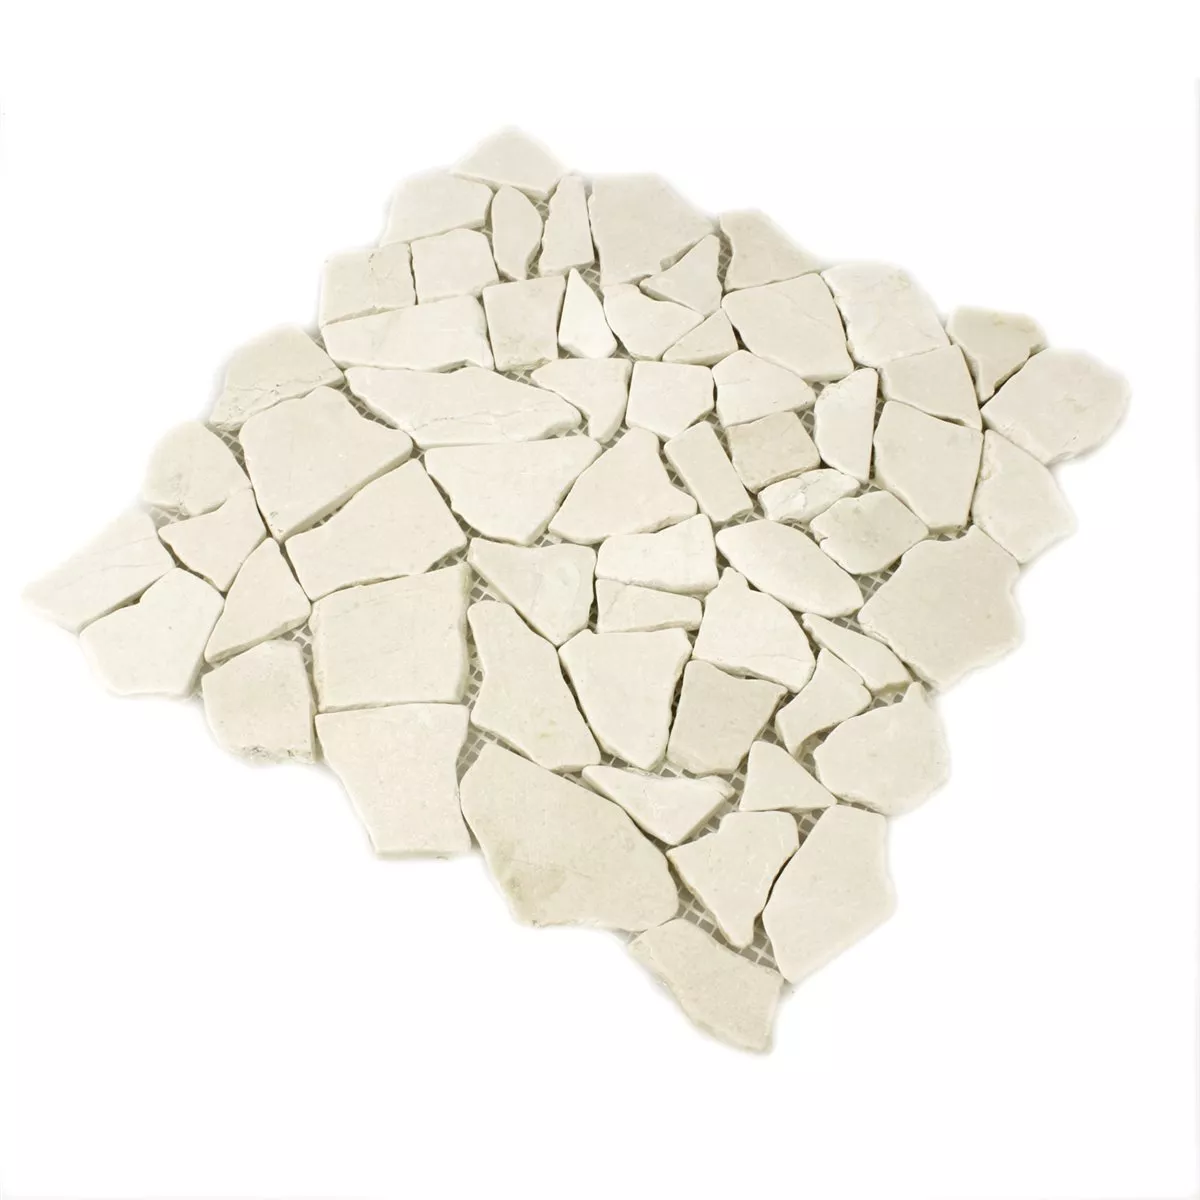 Sample Mosaic Tiles Broken Marble Botticino